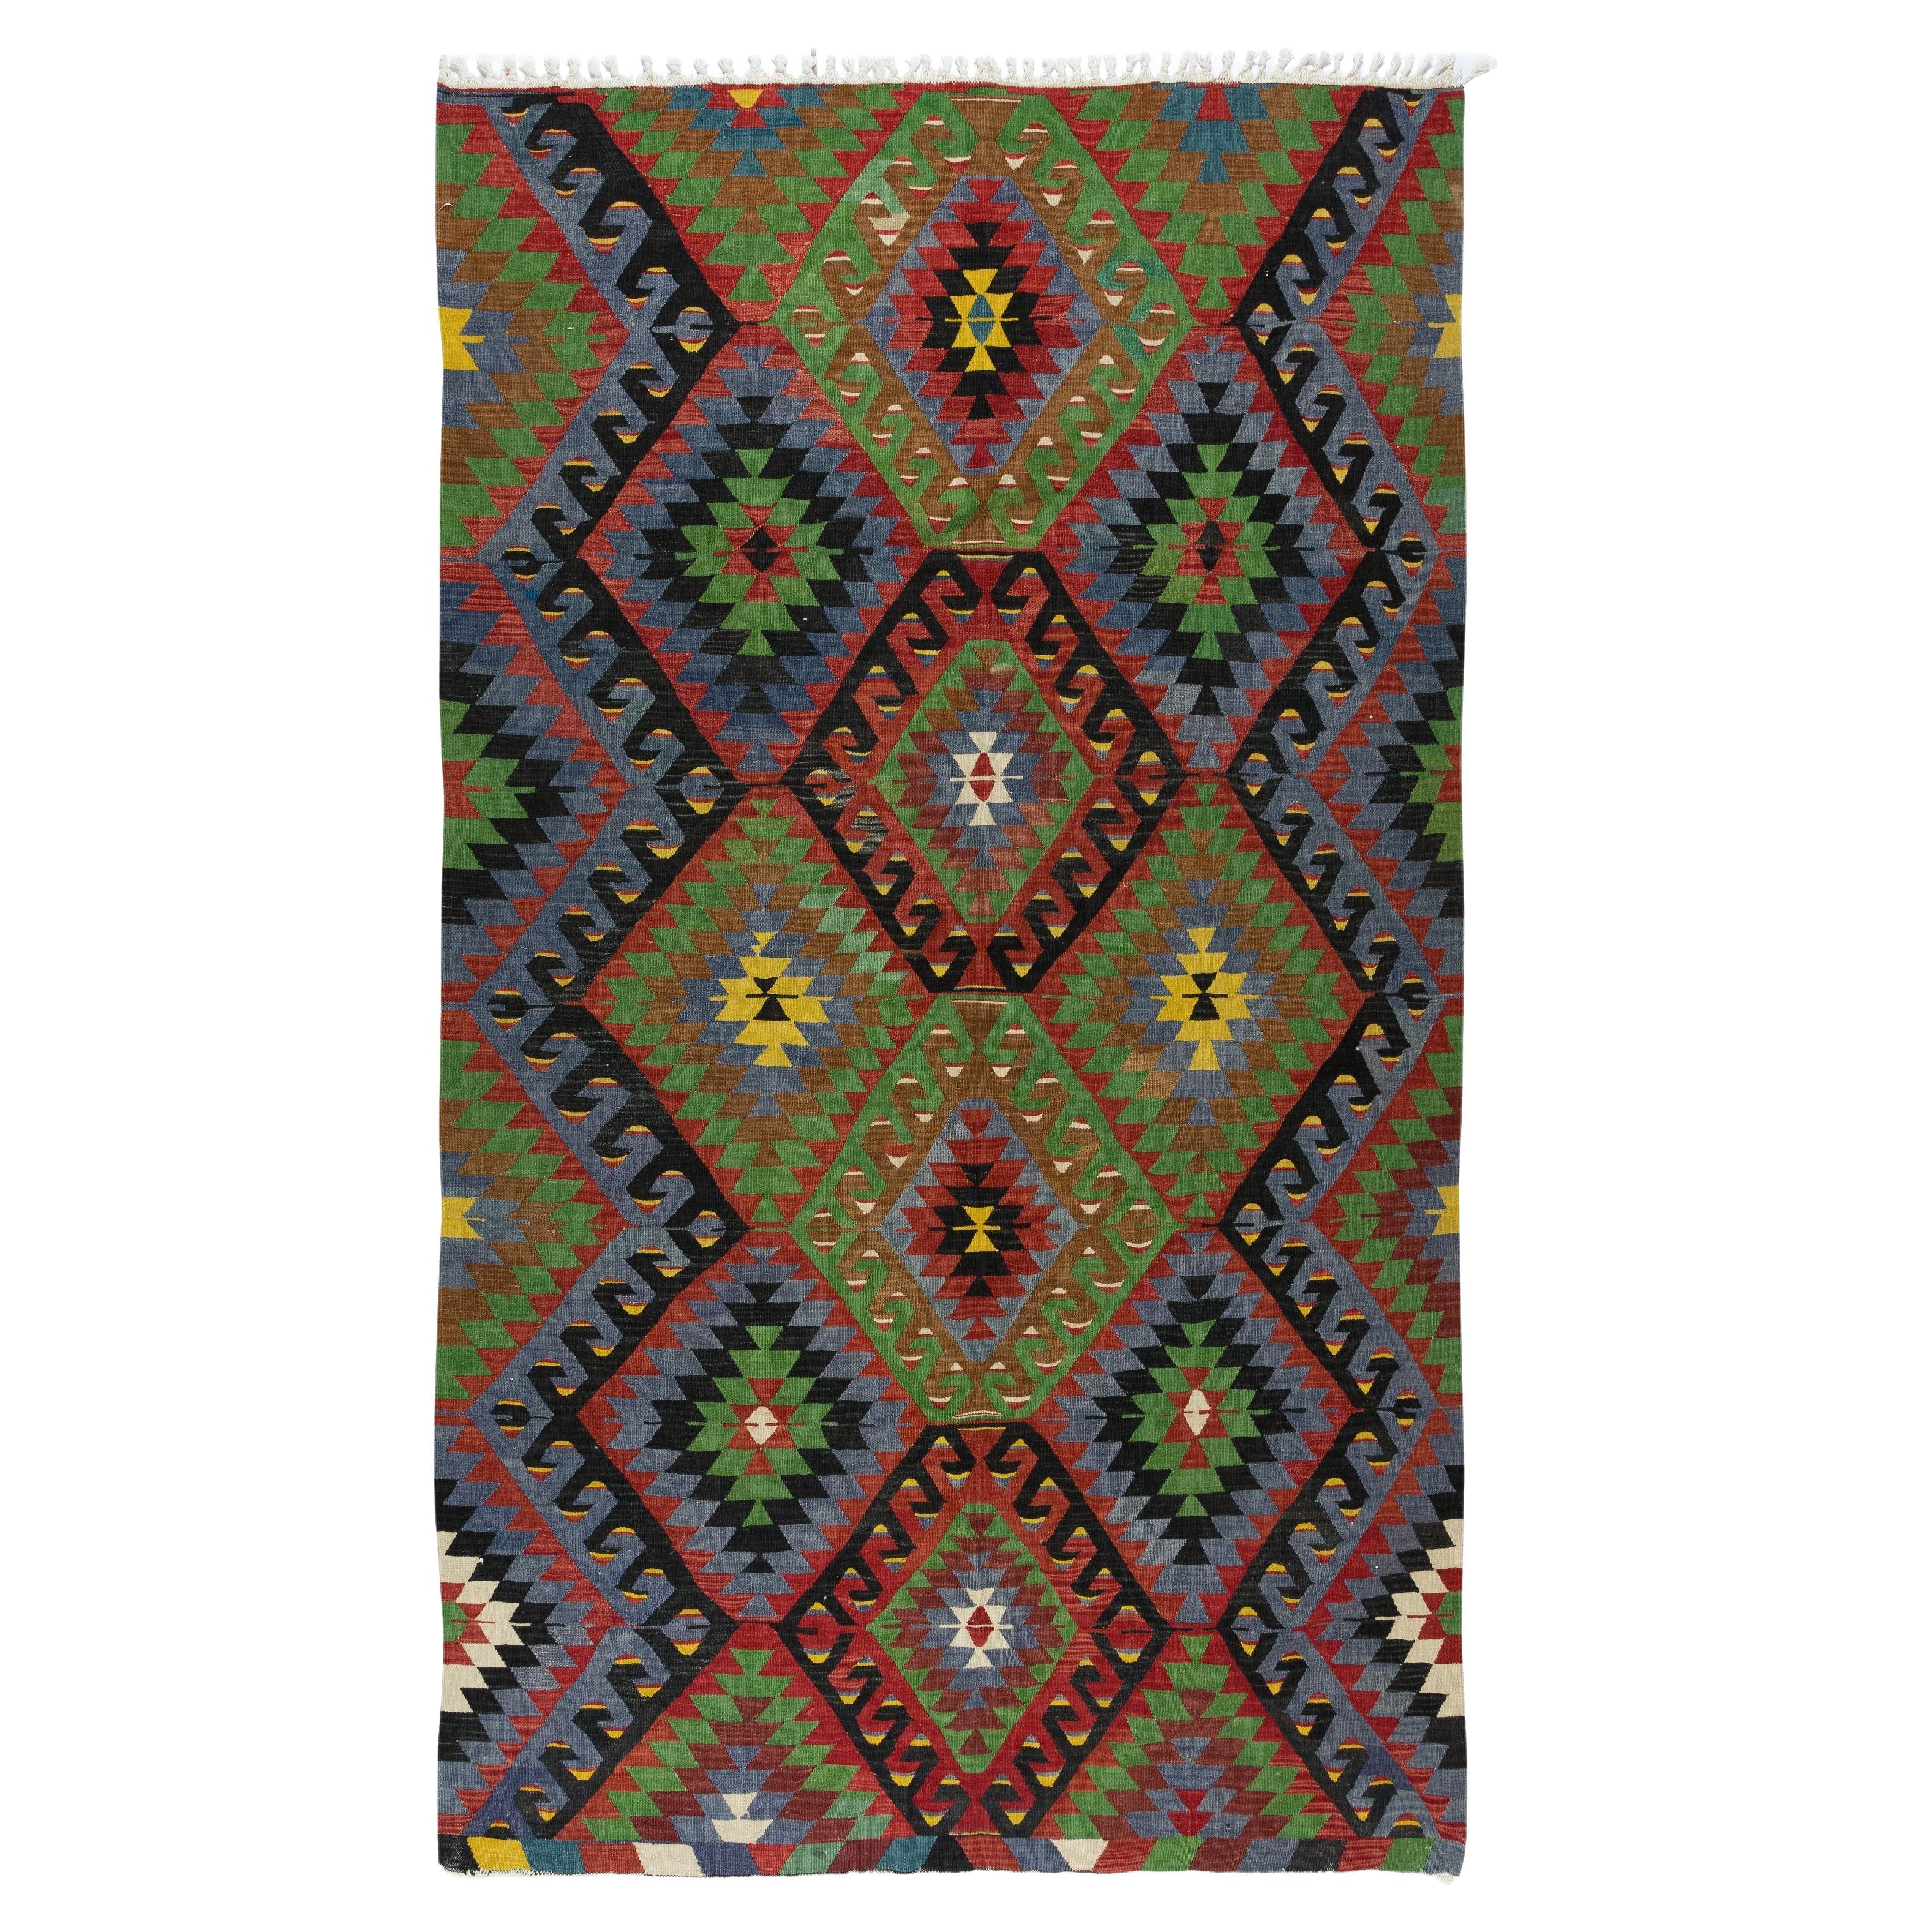 5.6x9.3 Ft Multicolored Handmade Turkish Wool Kilim, One of a Kind FlatWeave Rug For Sale